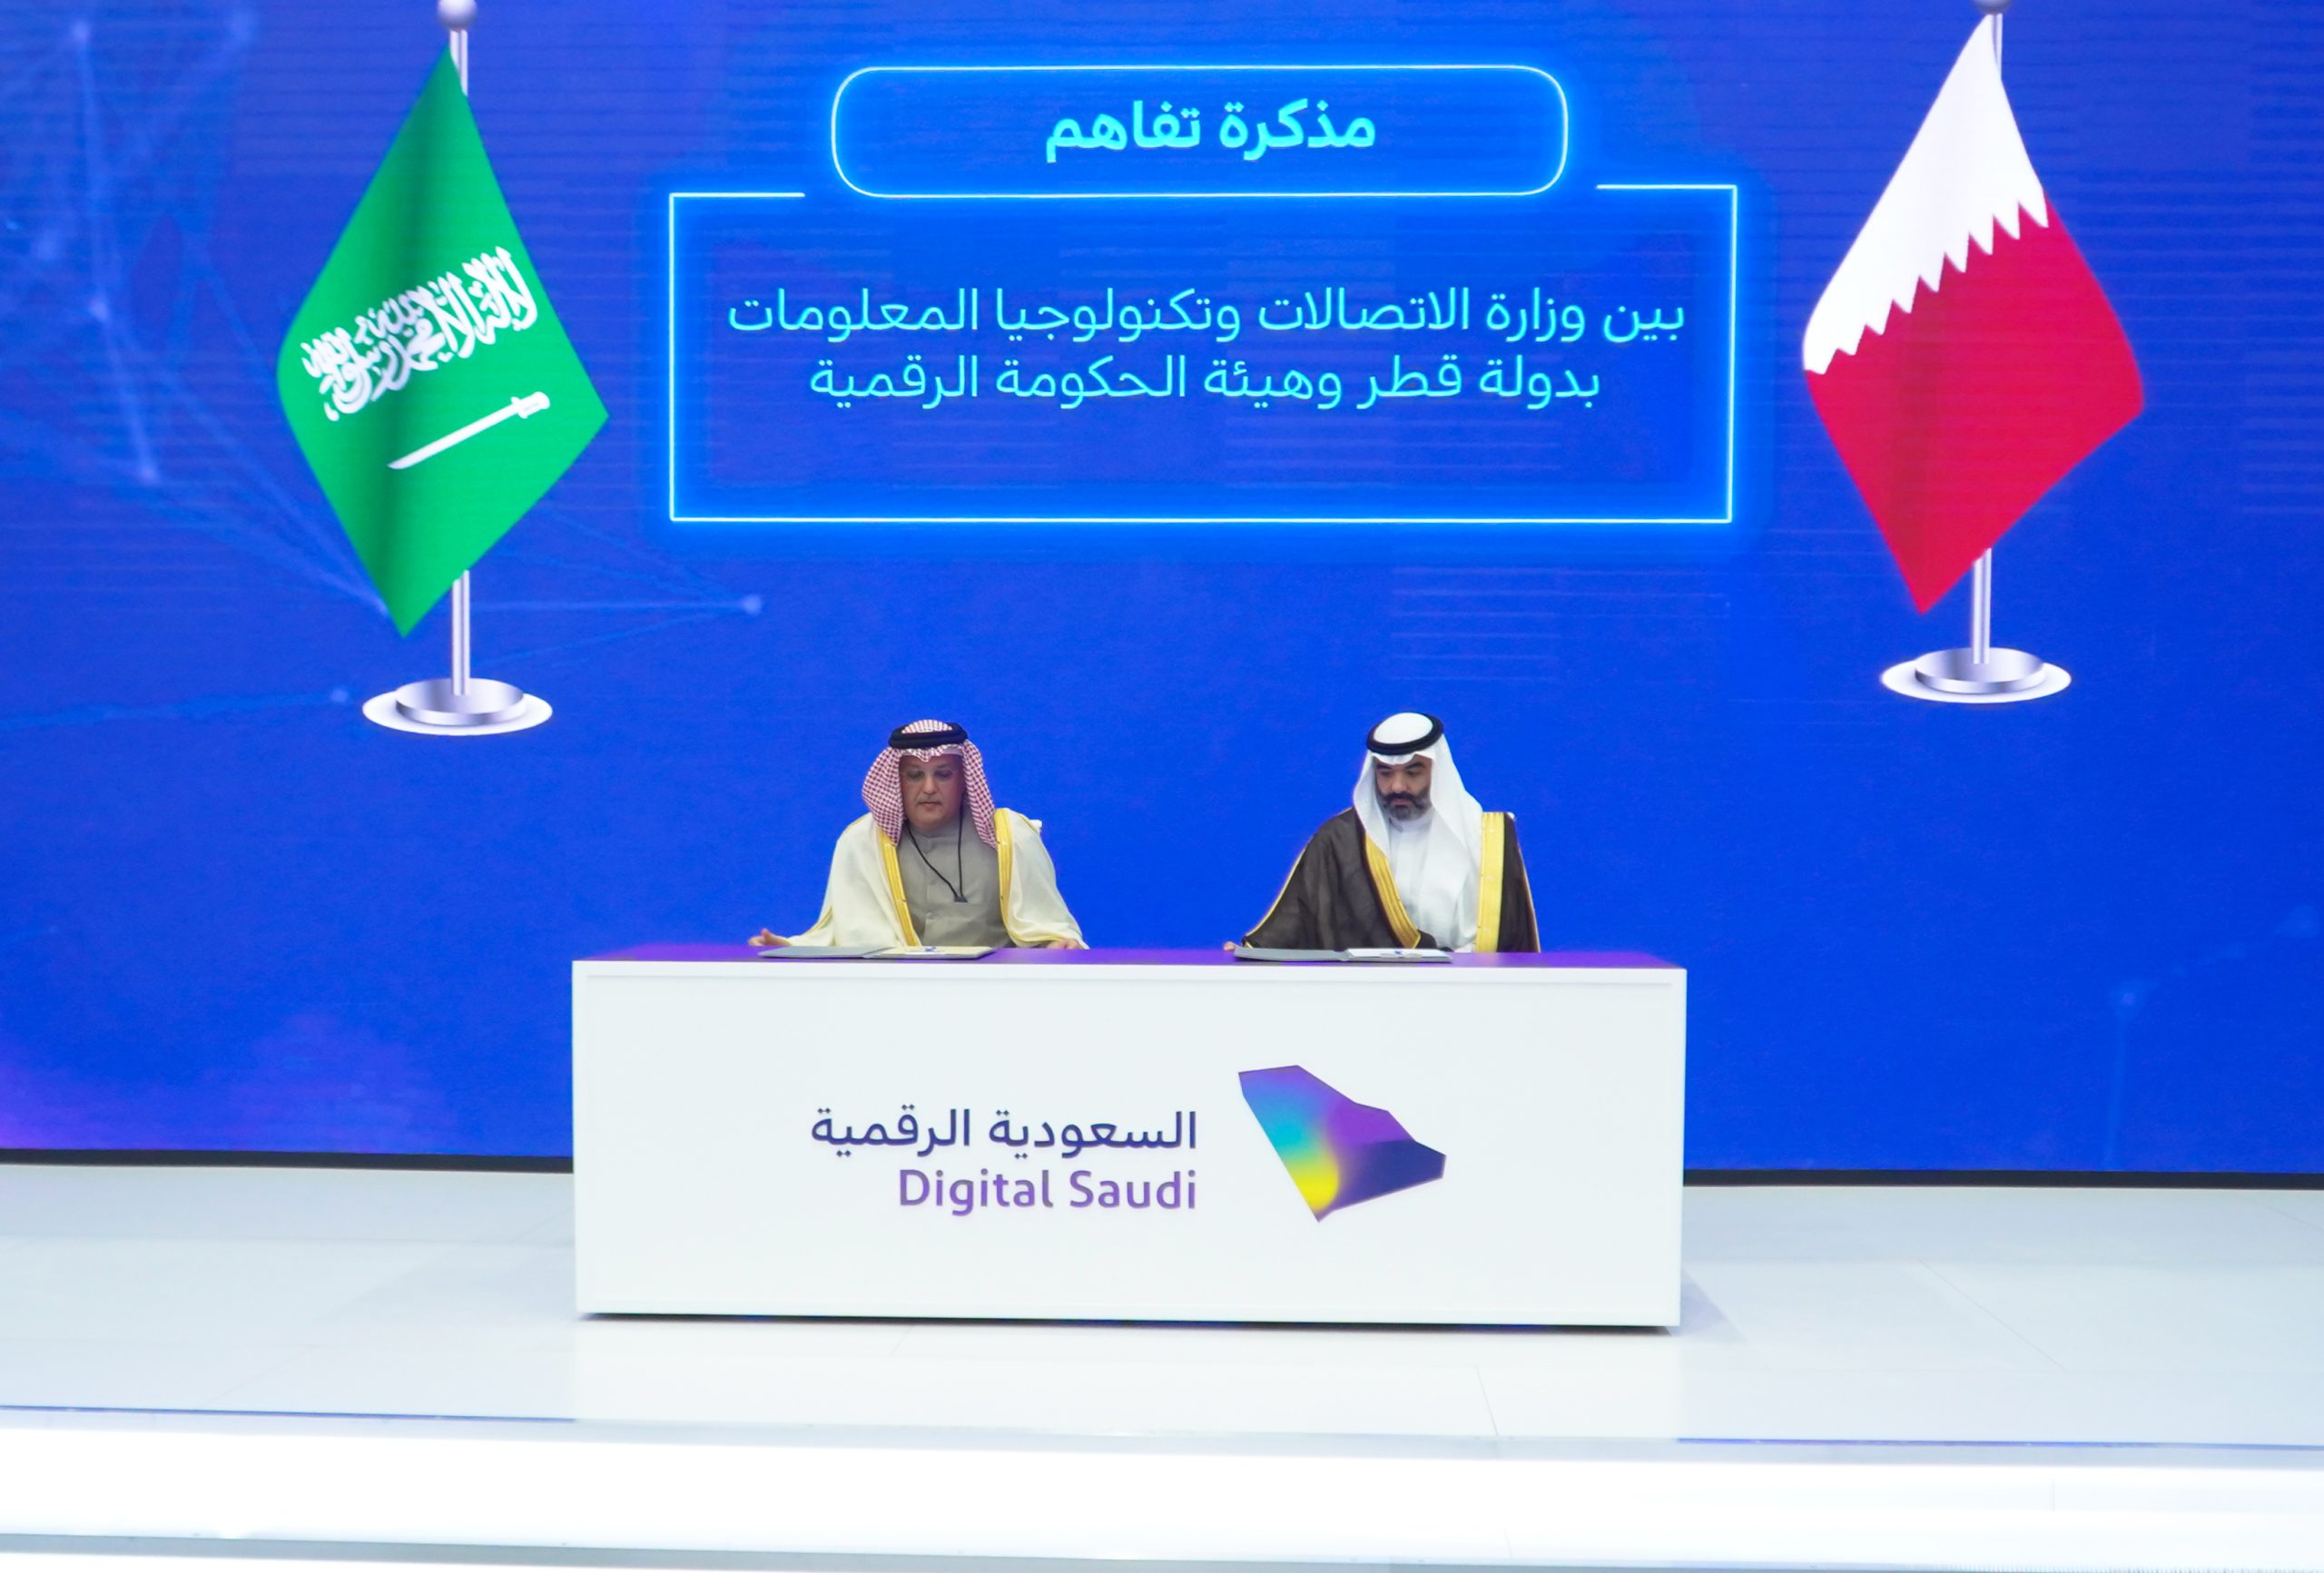 Qatar, Saudi Arabia ink agreement on digital governance cooperation